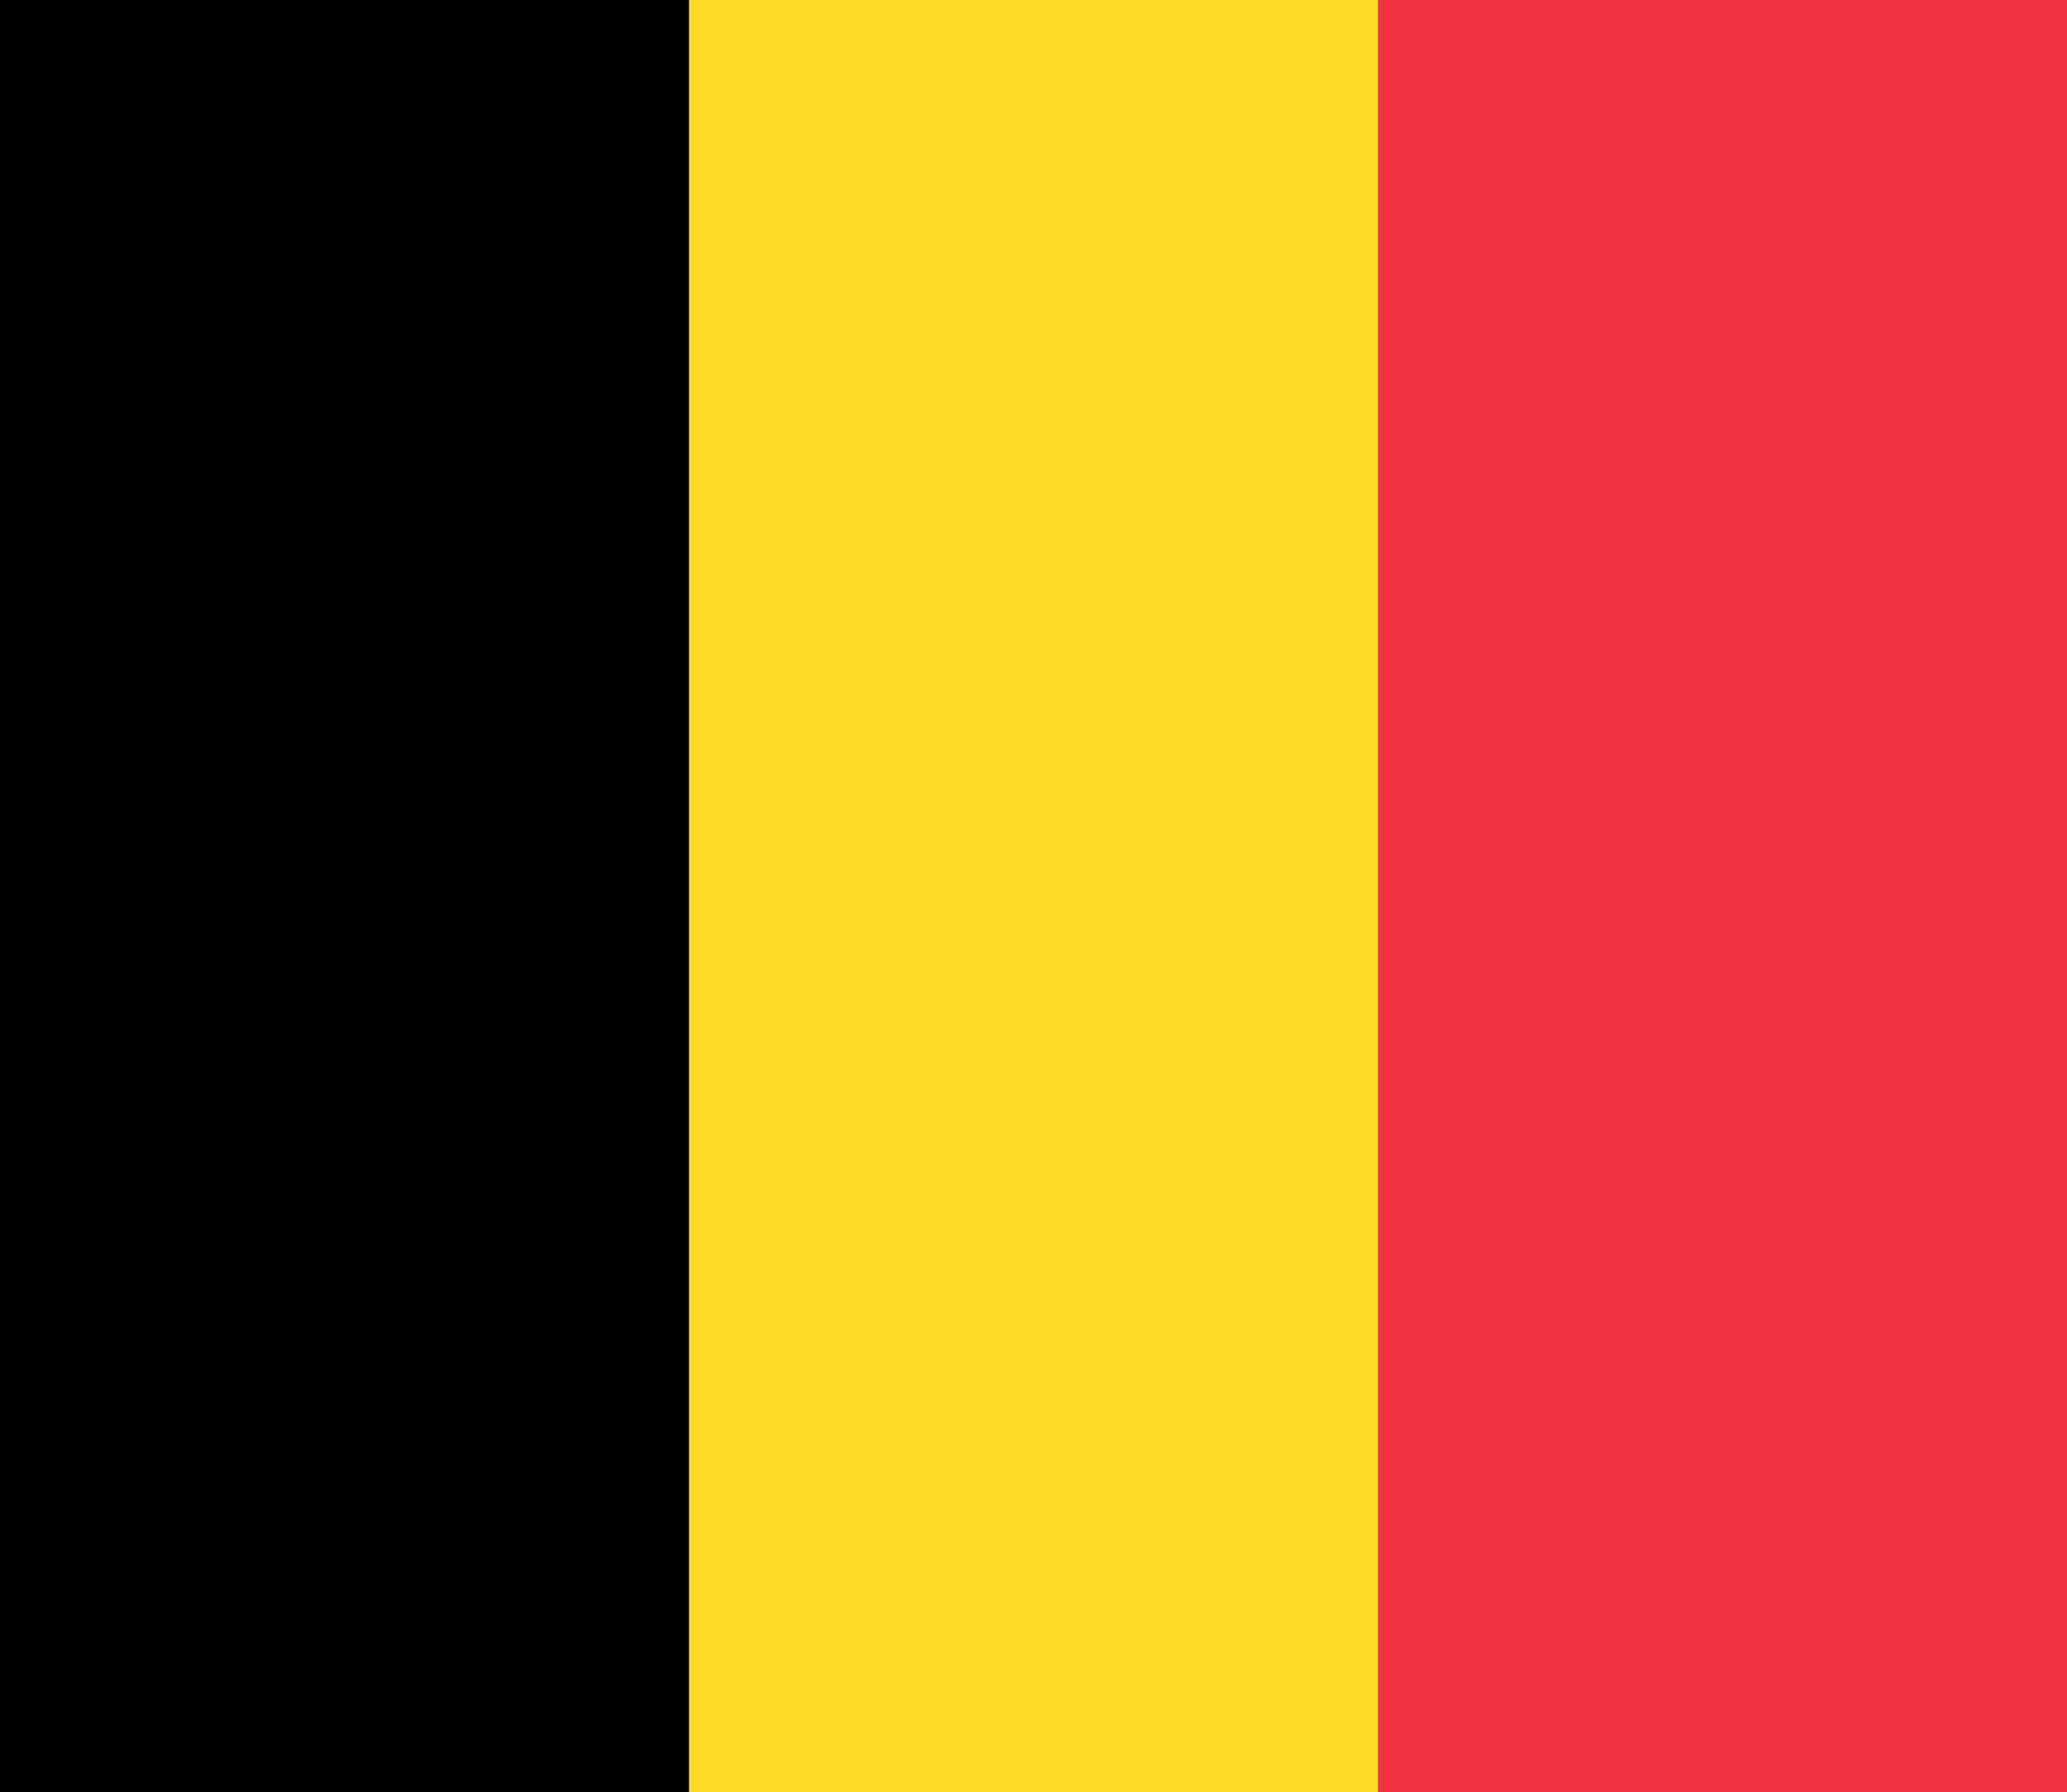 Drone Laws in Belgium